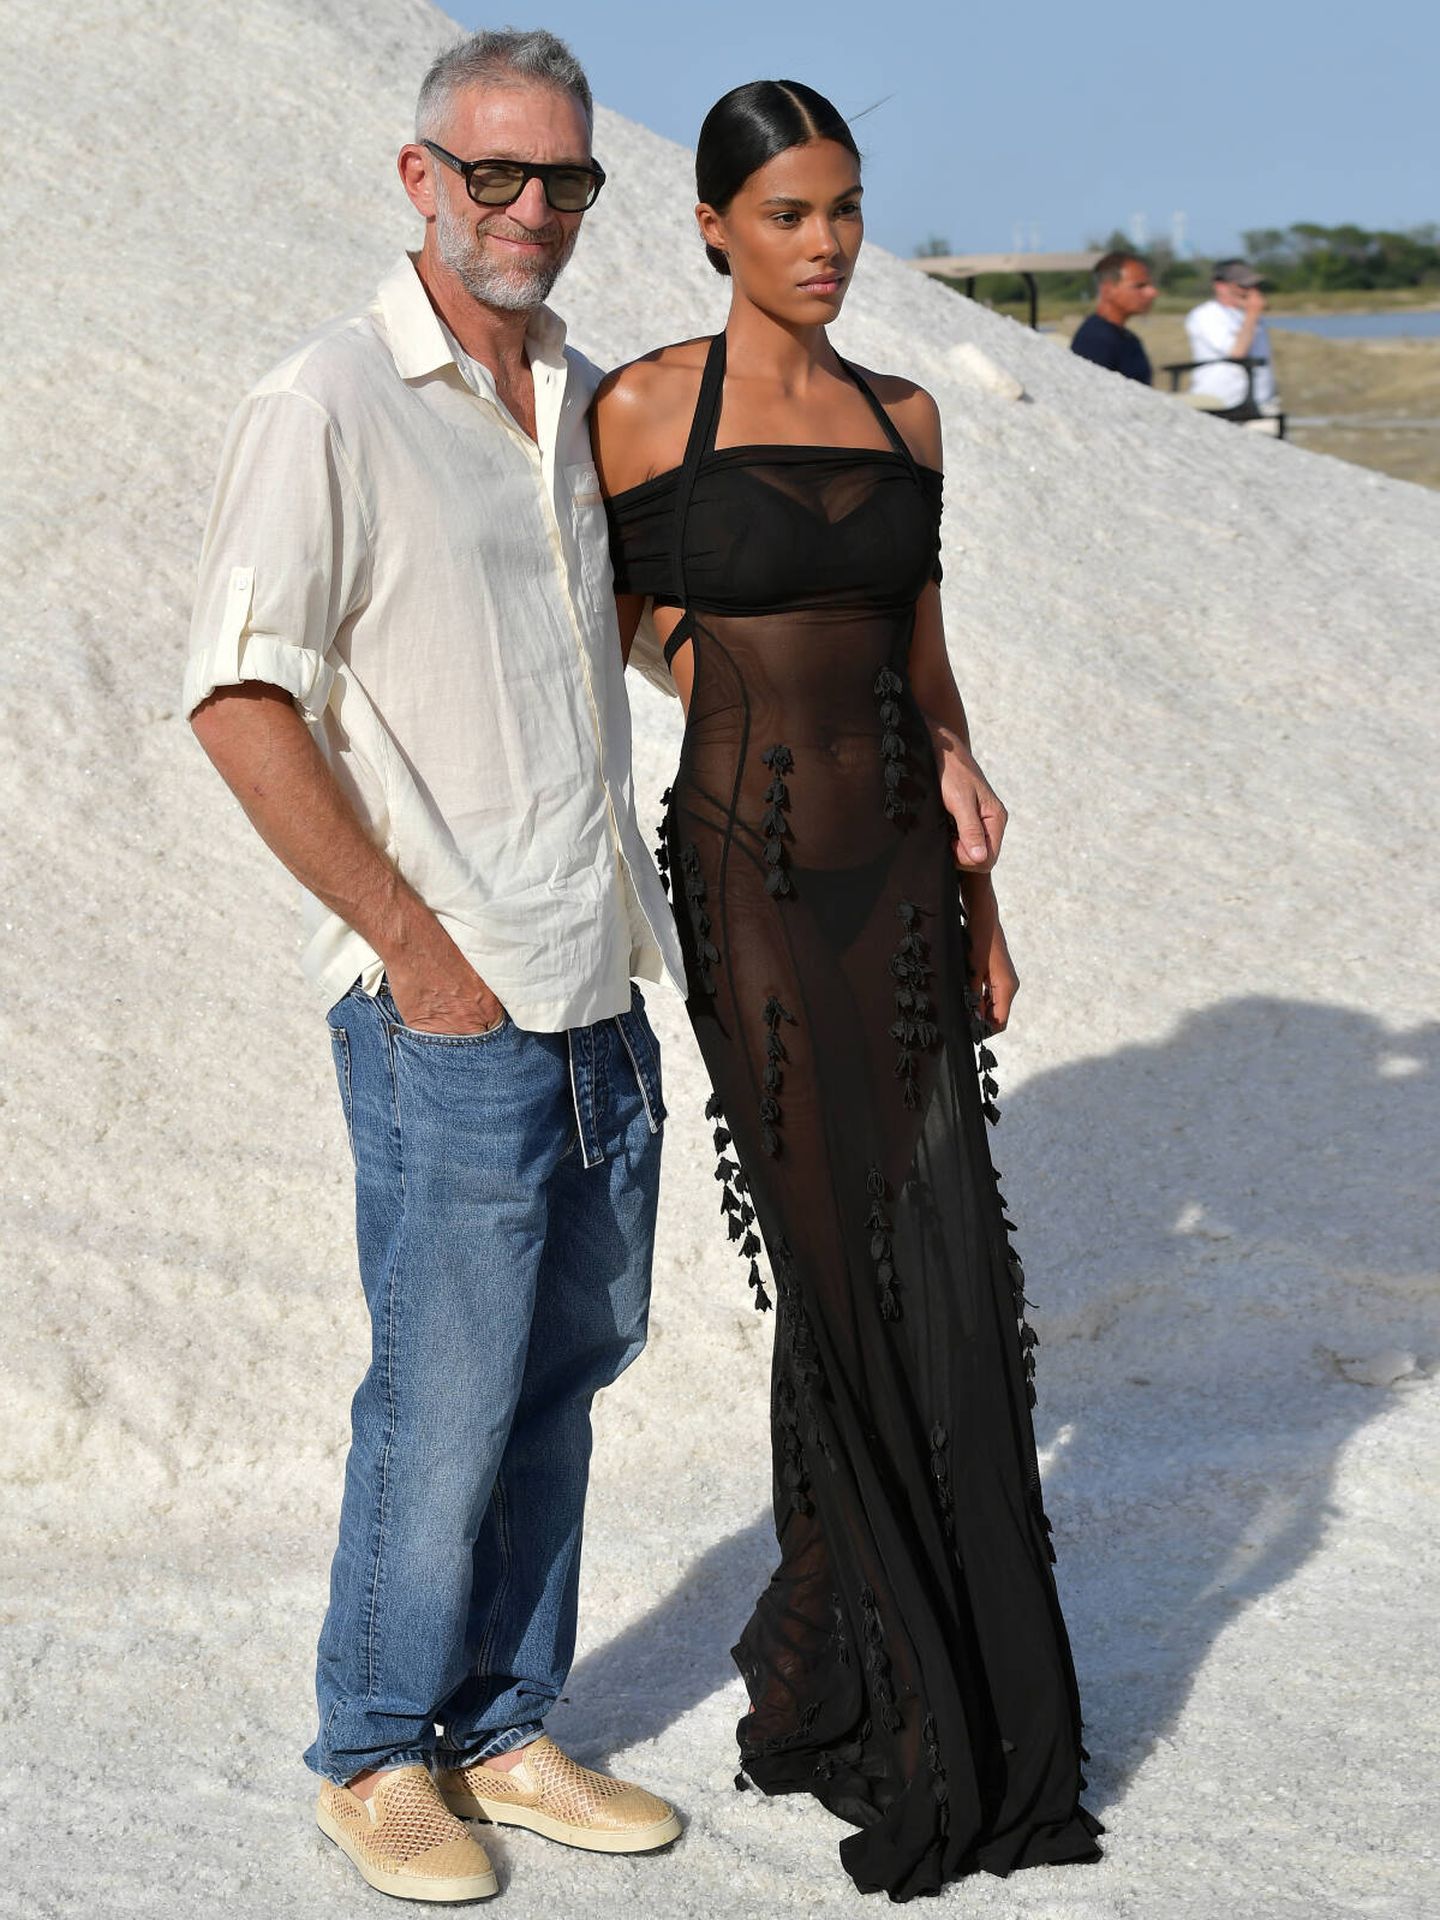 Vincent Cassel y Tina Kunakey, antes del desfile de Jacquemus en Arlés. (Getty/Dominique Charria)